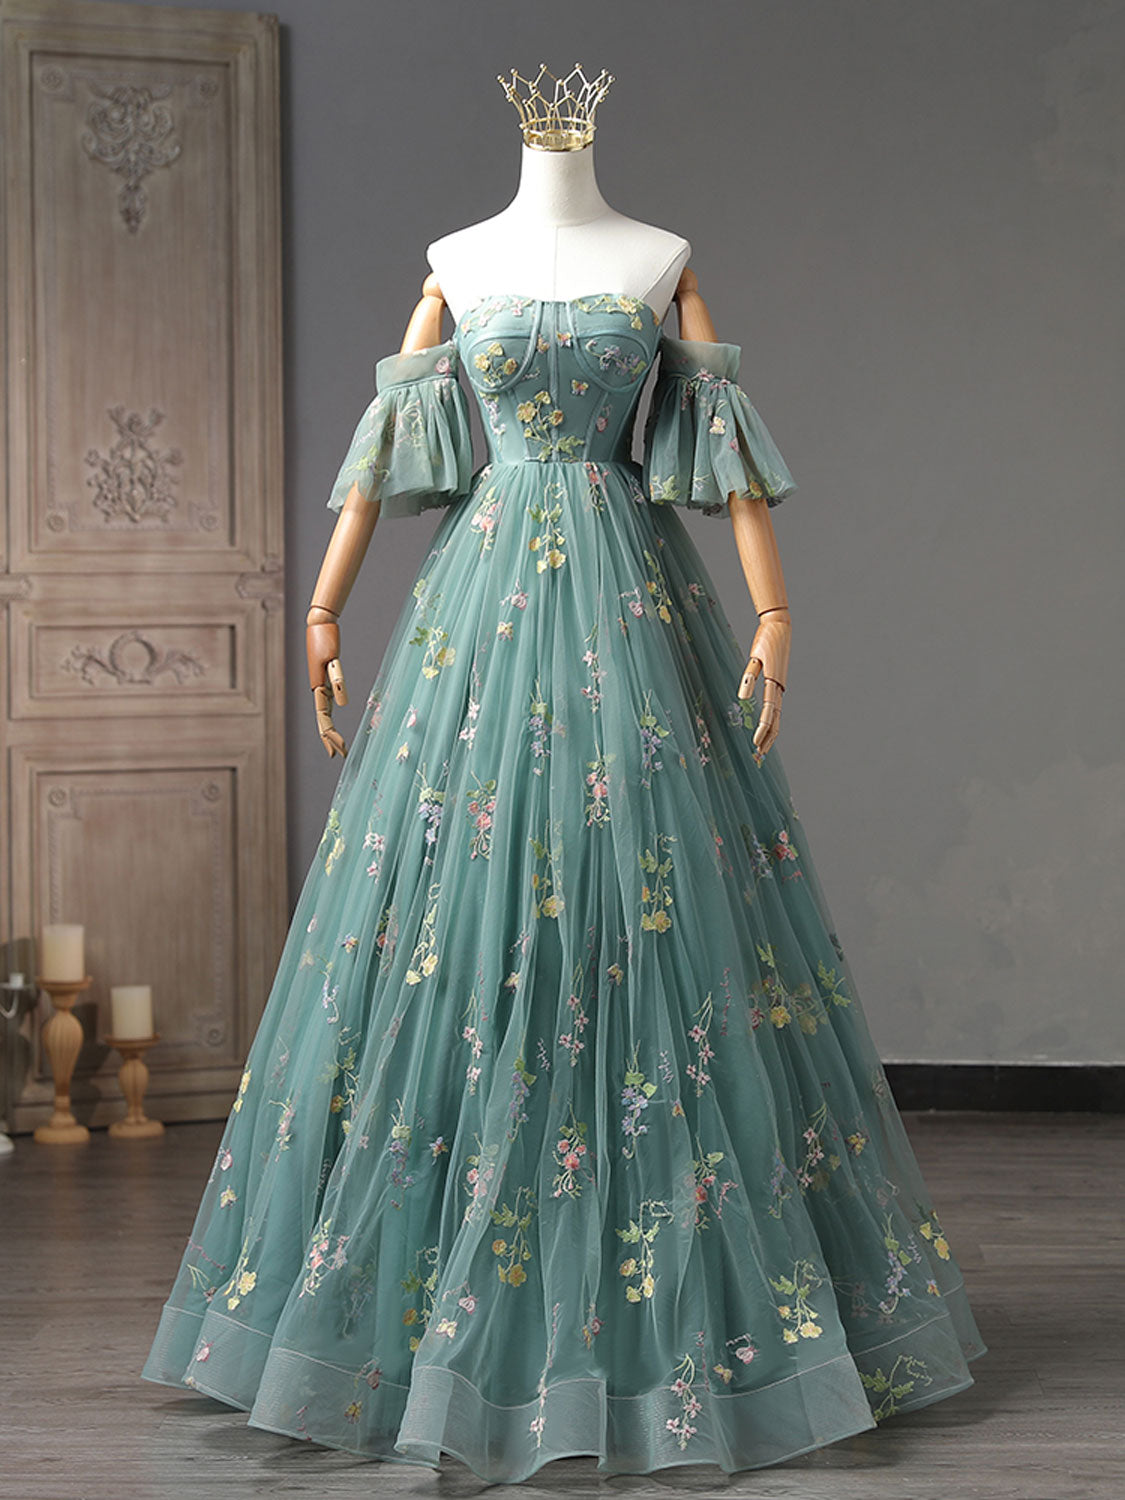 Renaissance Gown Queen Princess Prom dresses Marie Antoinette Costume | eBay